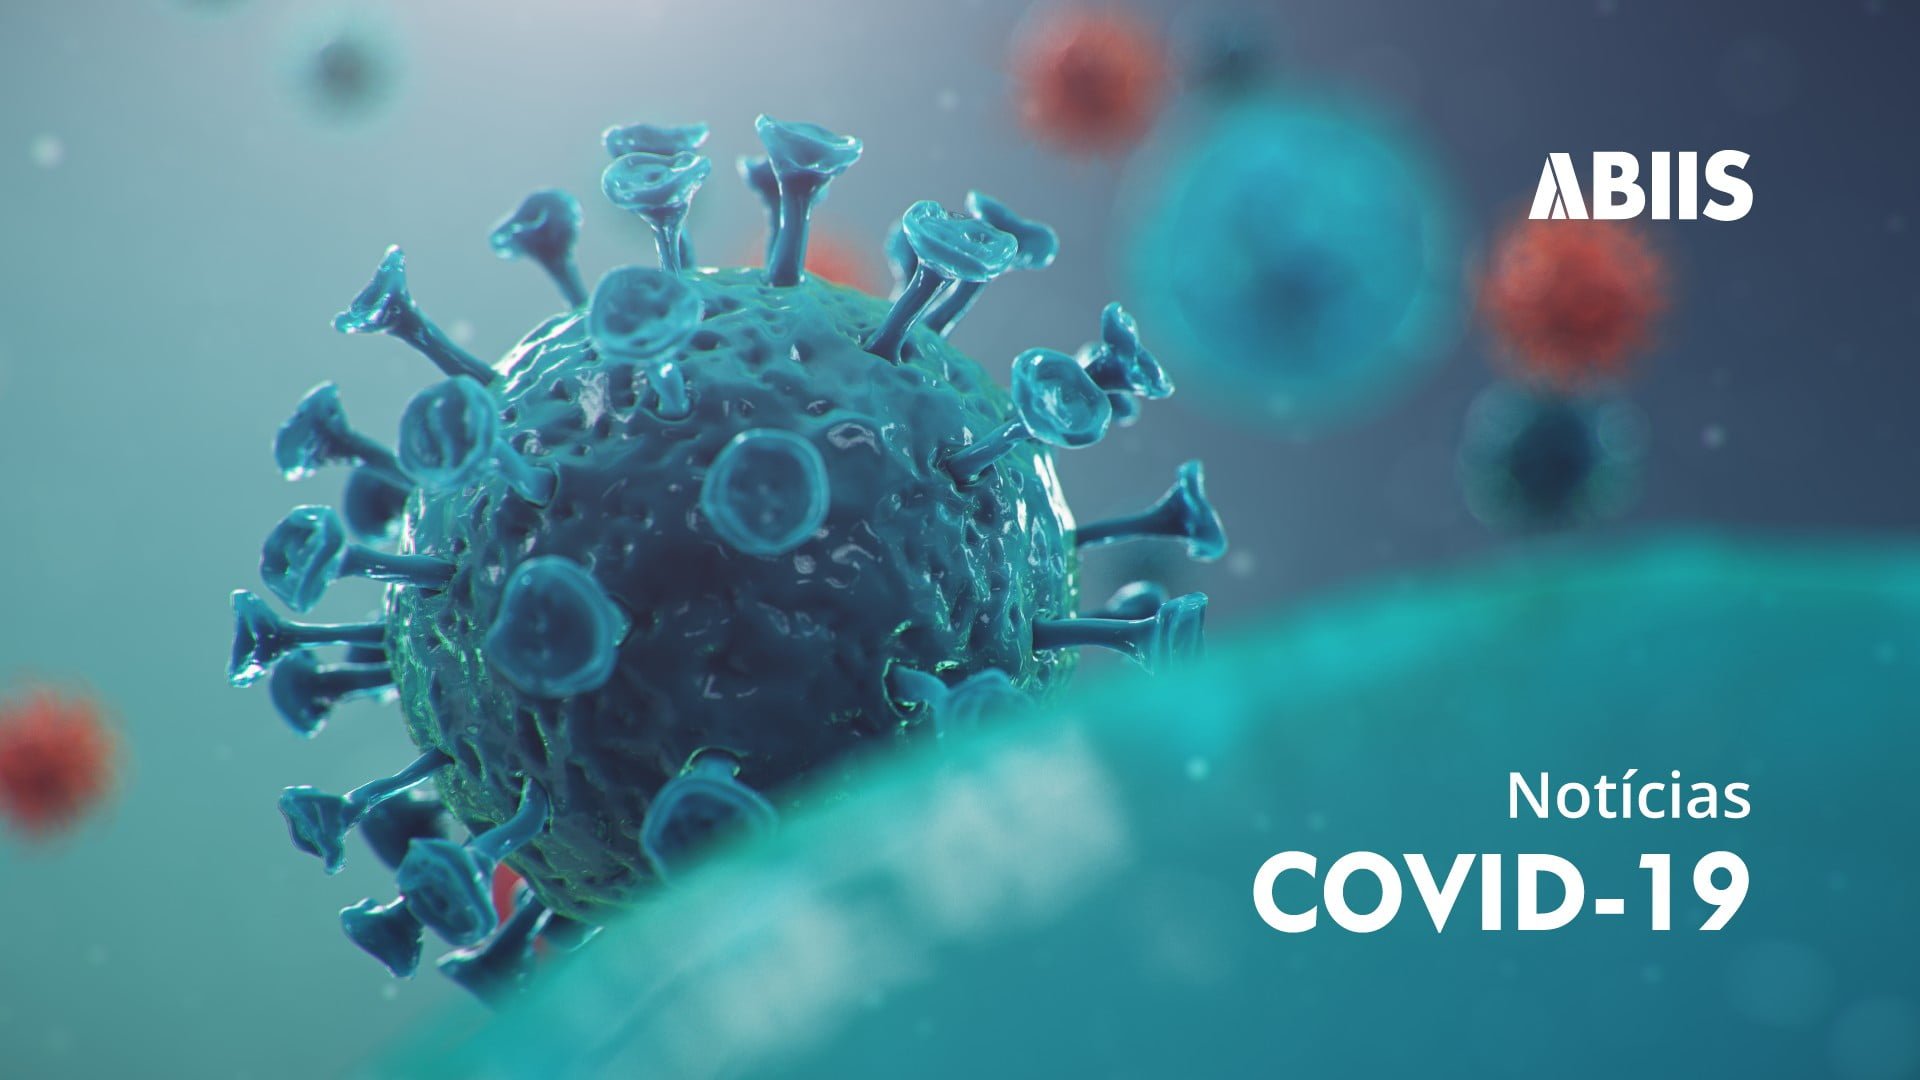 ABIIS - Notícias sobre Coronavírus COVID-19